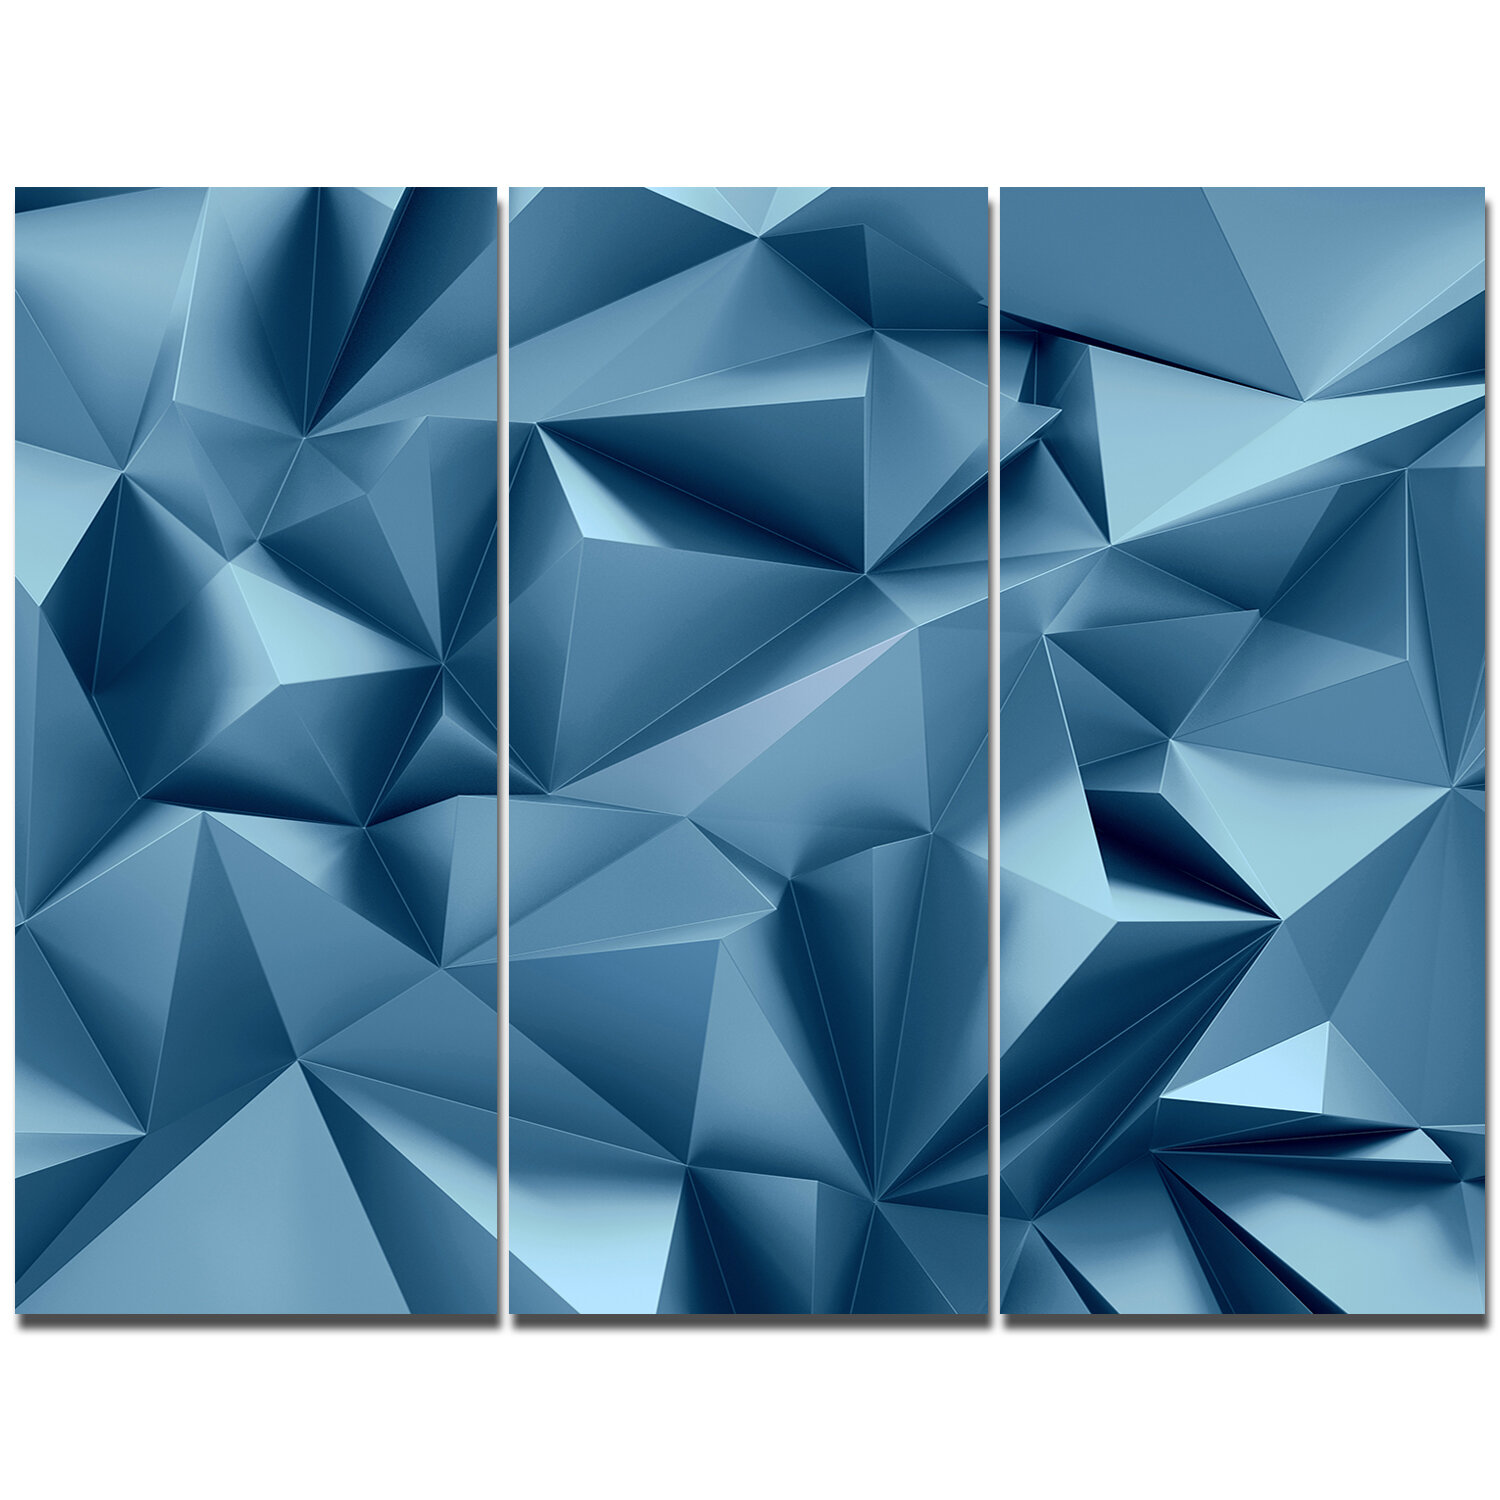 Designart 3d Abstract Geometric Background Graphic Art Multi Piece Image On Canvas Wayfair